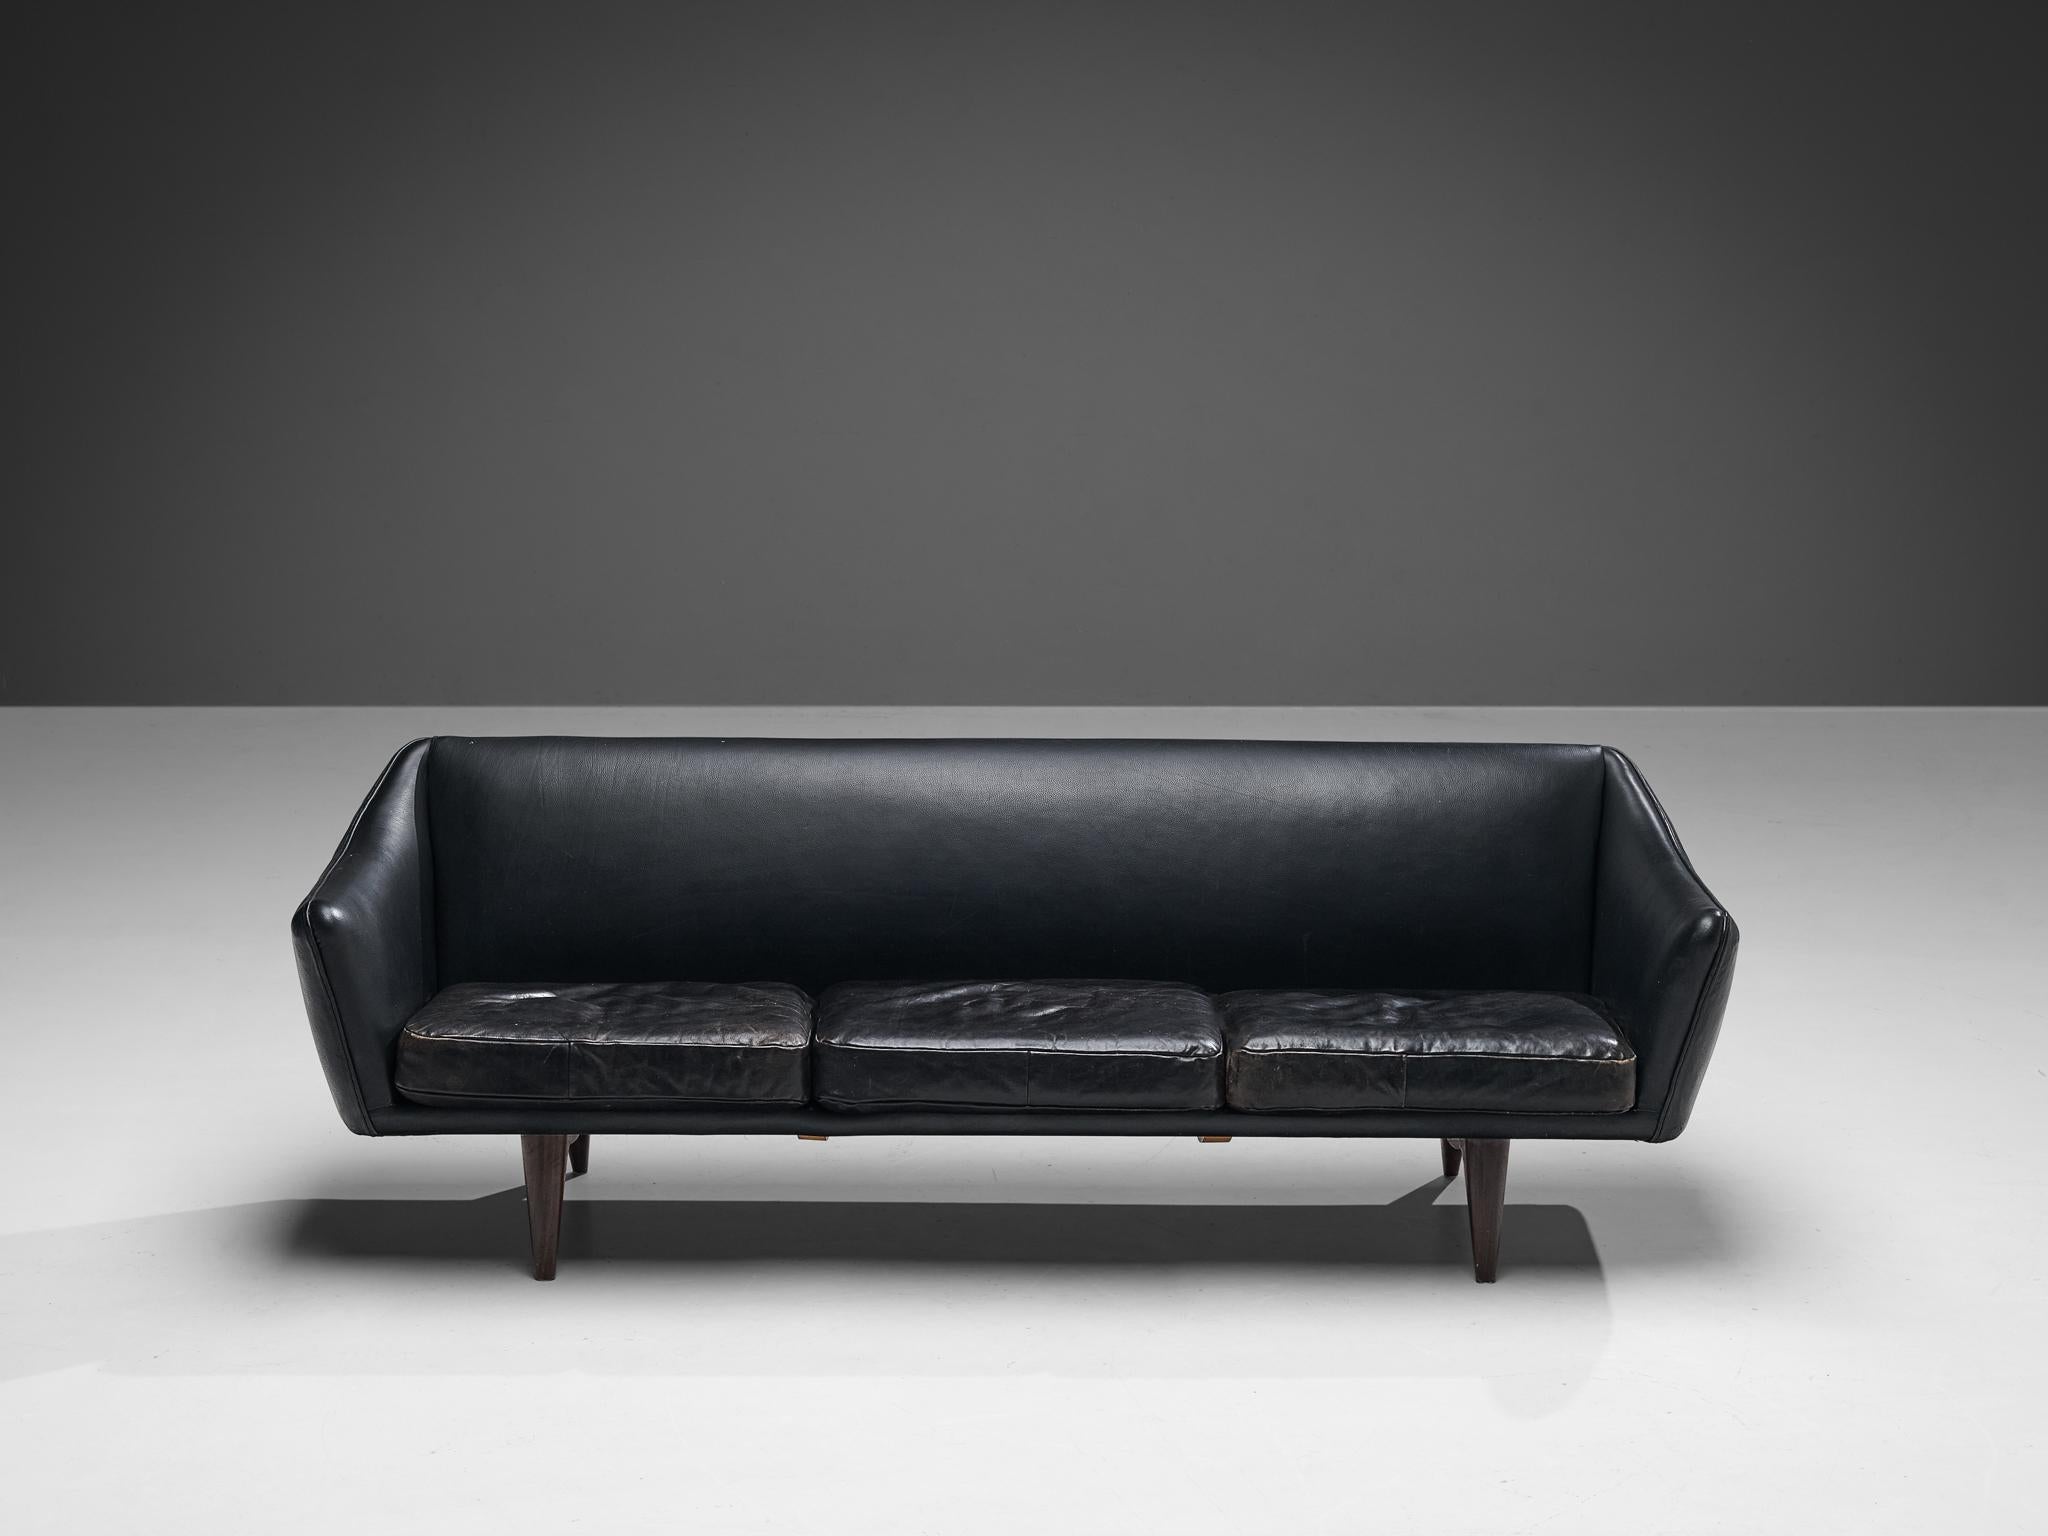 Illum Wikkelsø for A. Mikael Laursen & Søn Sofa in Black Leather  For Sale 1